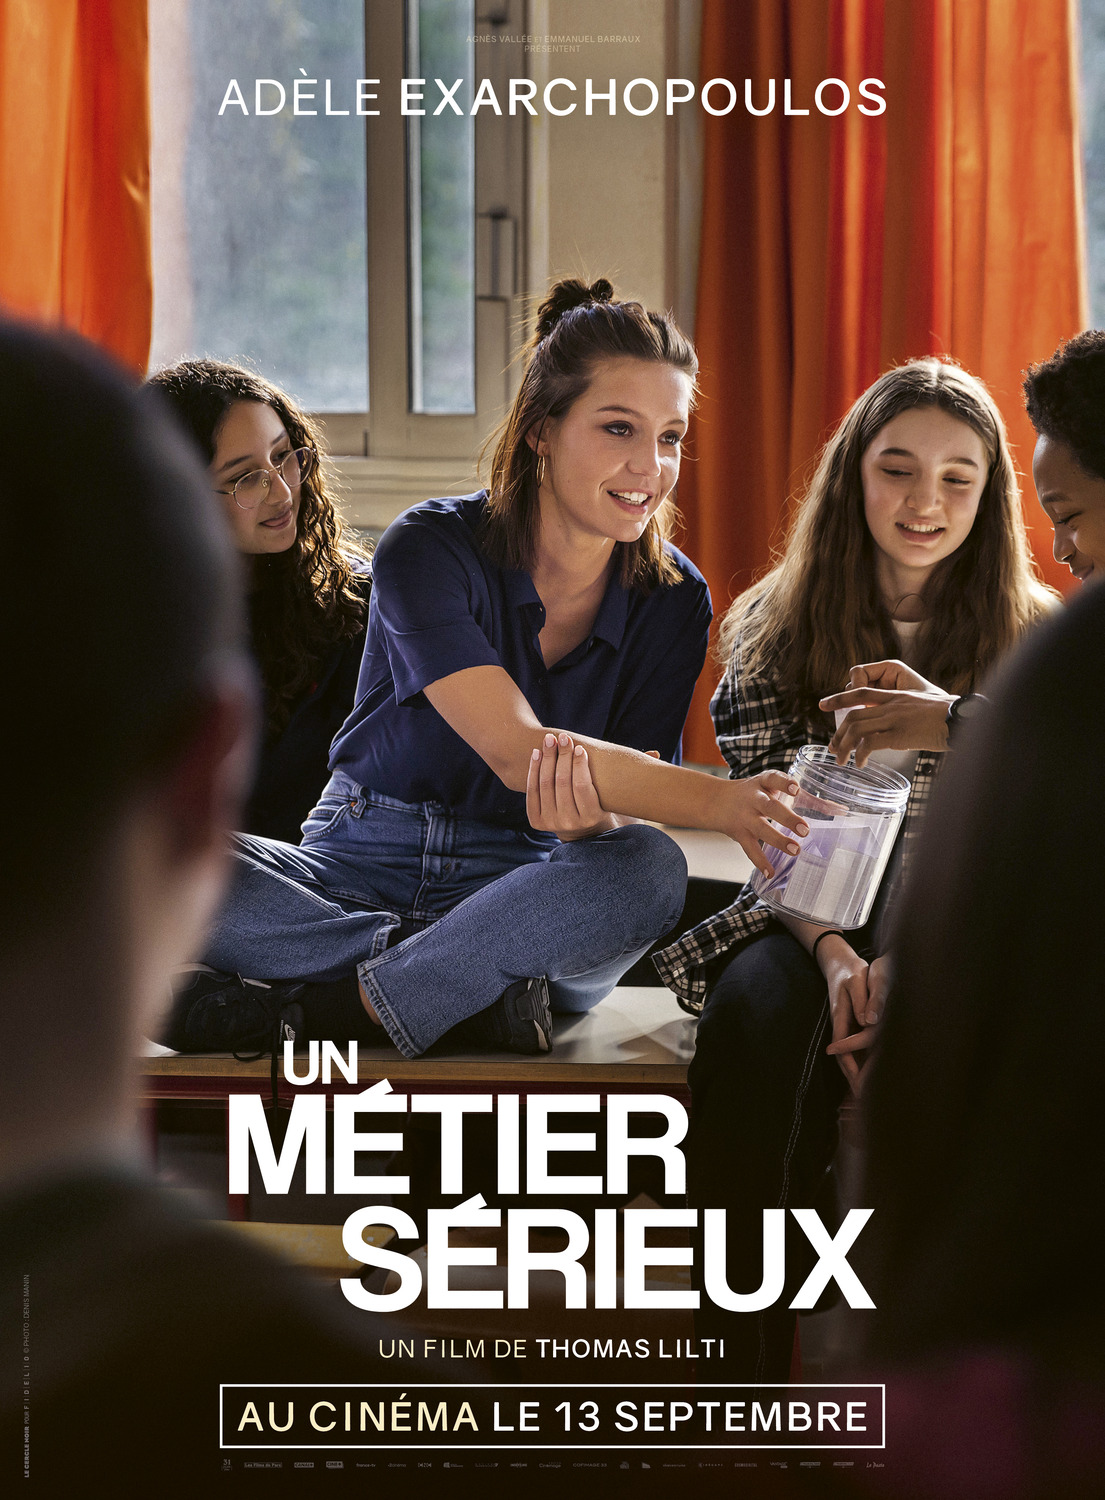 Extra Large Movie Poster Image for Un métier sérieux (#4 of 7)